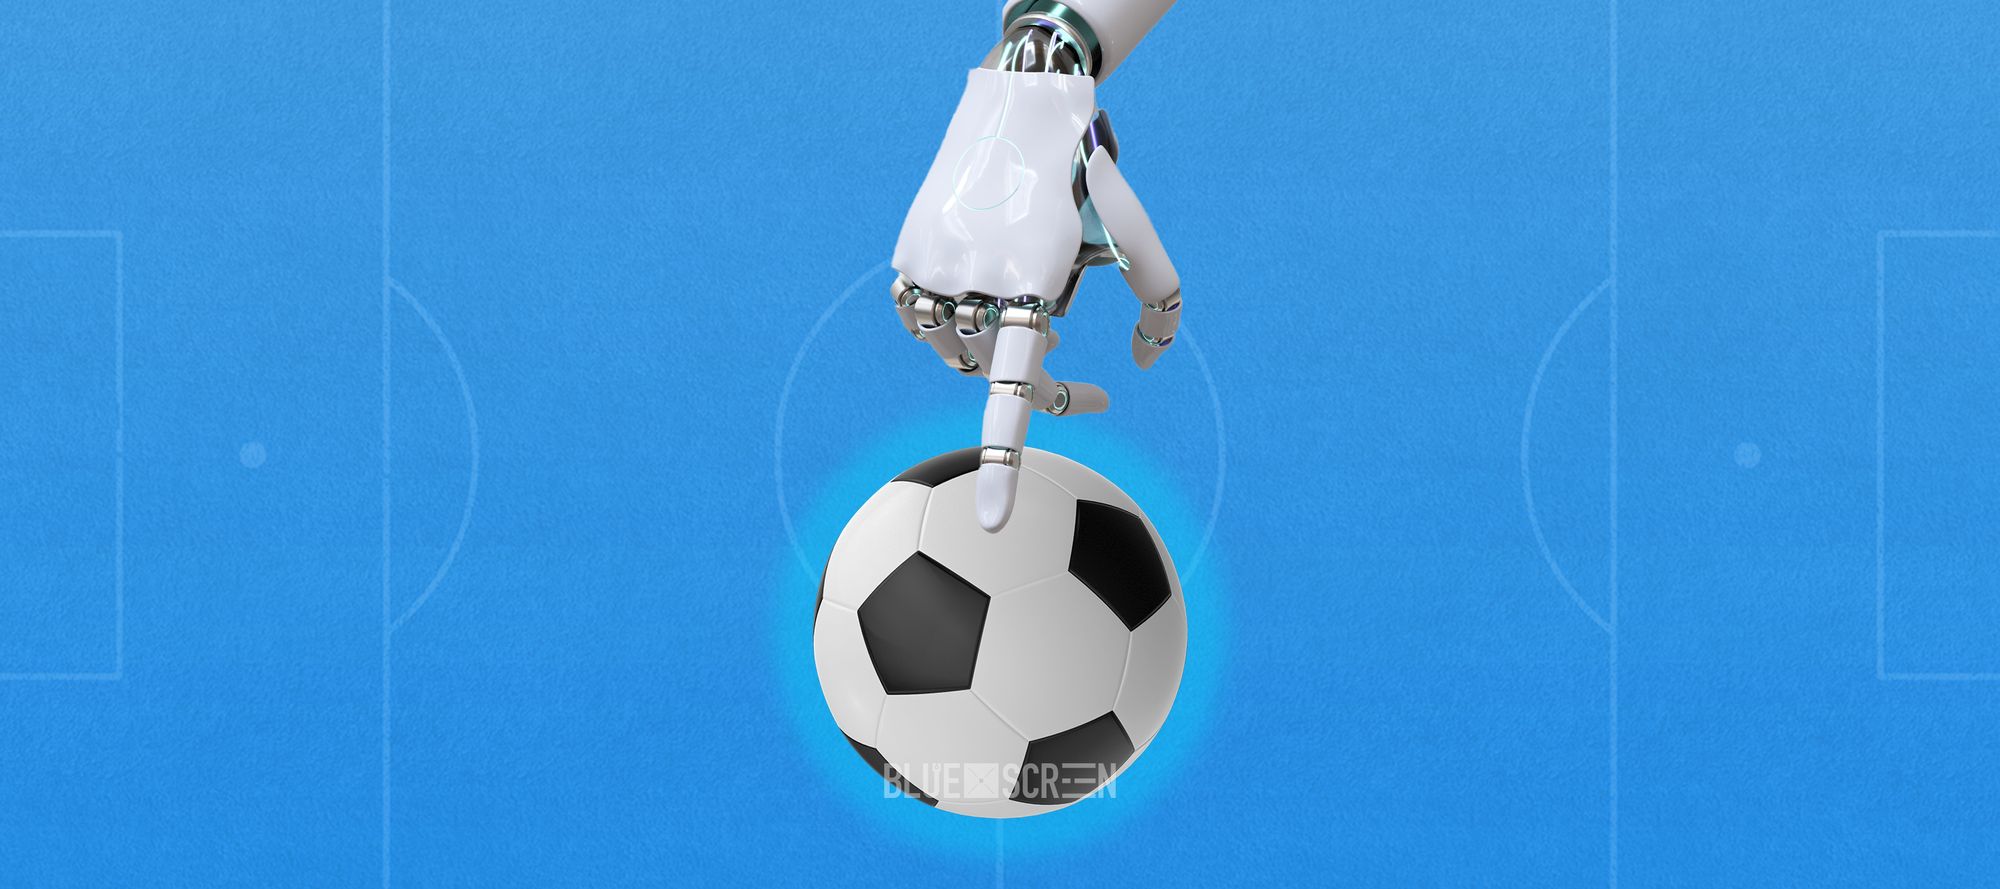 Какие технологии используют на Чемпионате мира по футболу в Катаре